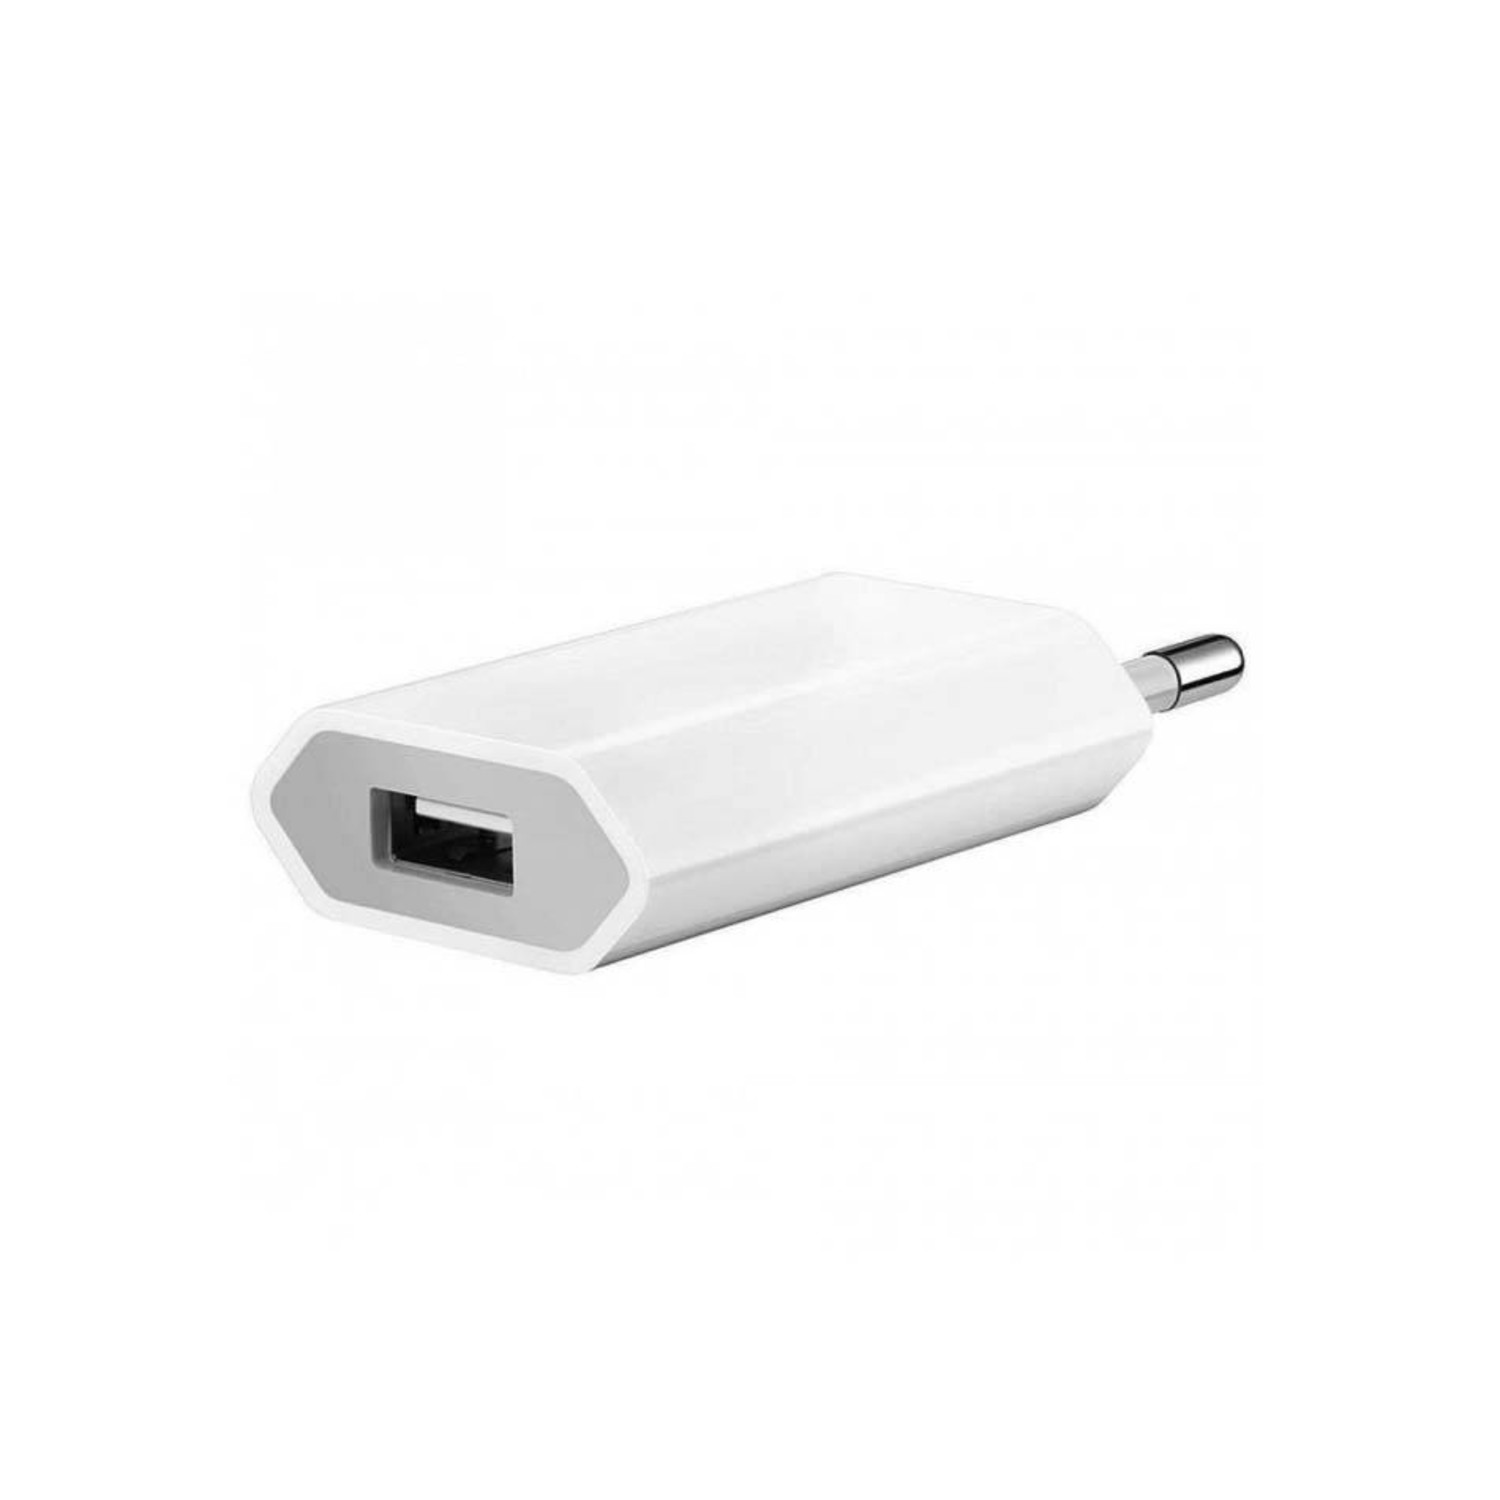 kaas Alvast Fantasierijk Apple 5W MD813 1-Poort USB Lader - Externe Batterij